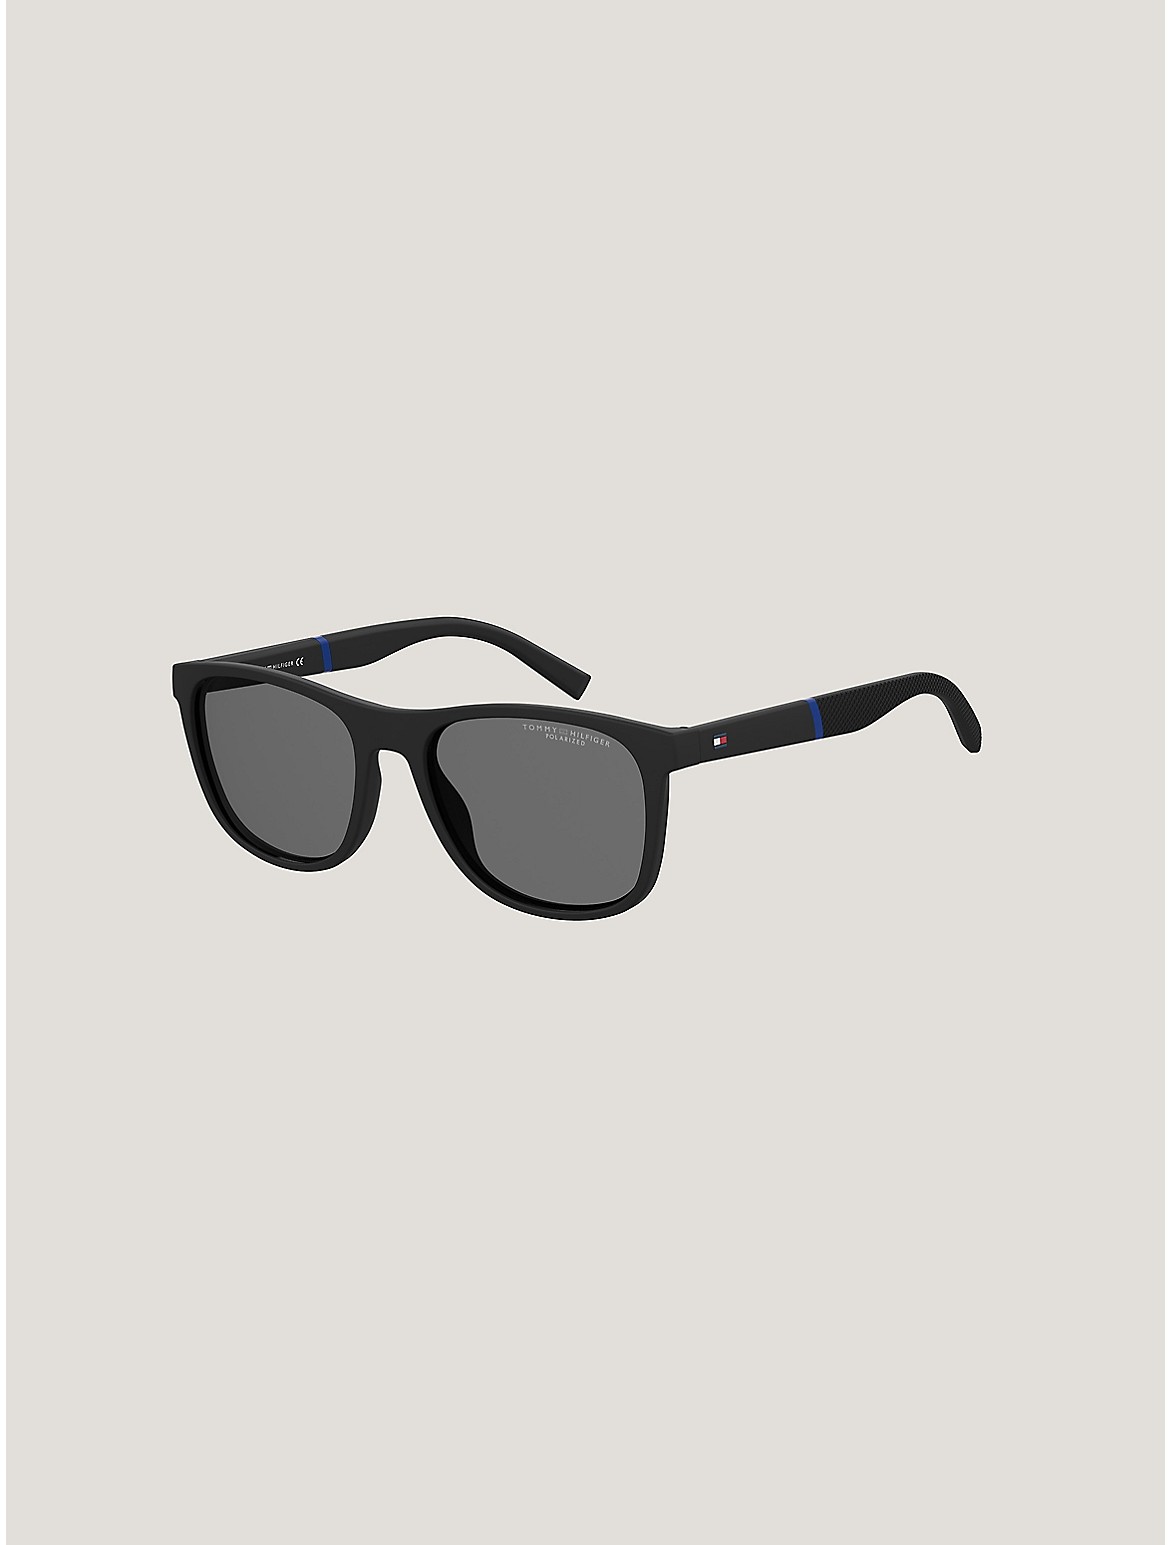 Tommy Hilfiger Men's Flag Logo Square Sunglasses